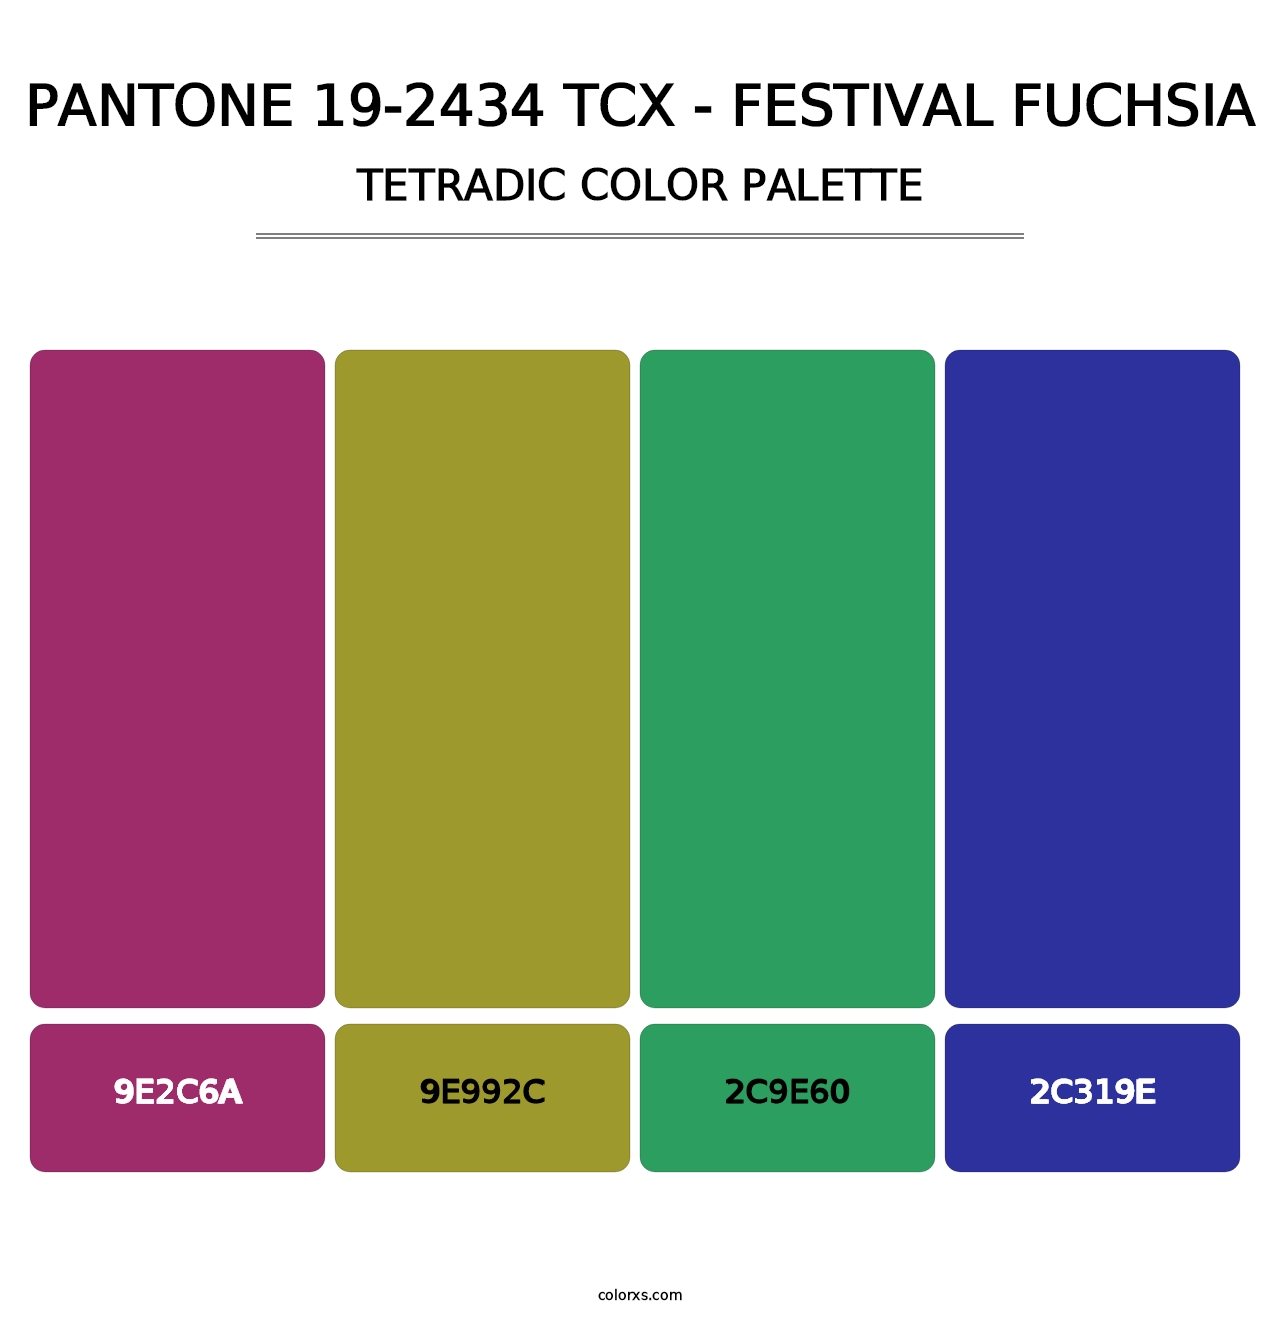 PANTONE 19-2434 TCX - Festival Fuchsia - Tetradic Color Palette